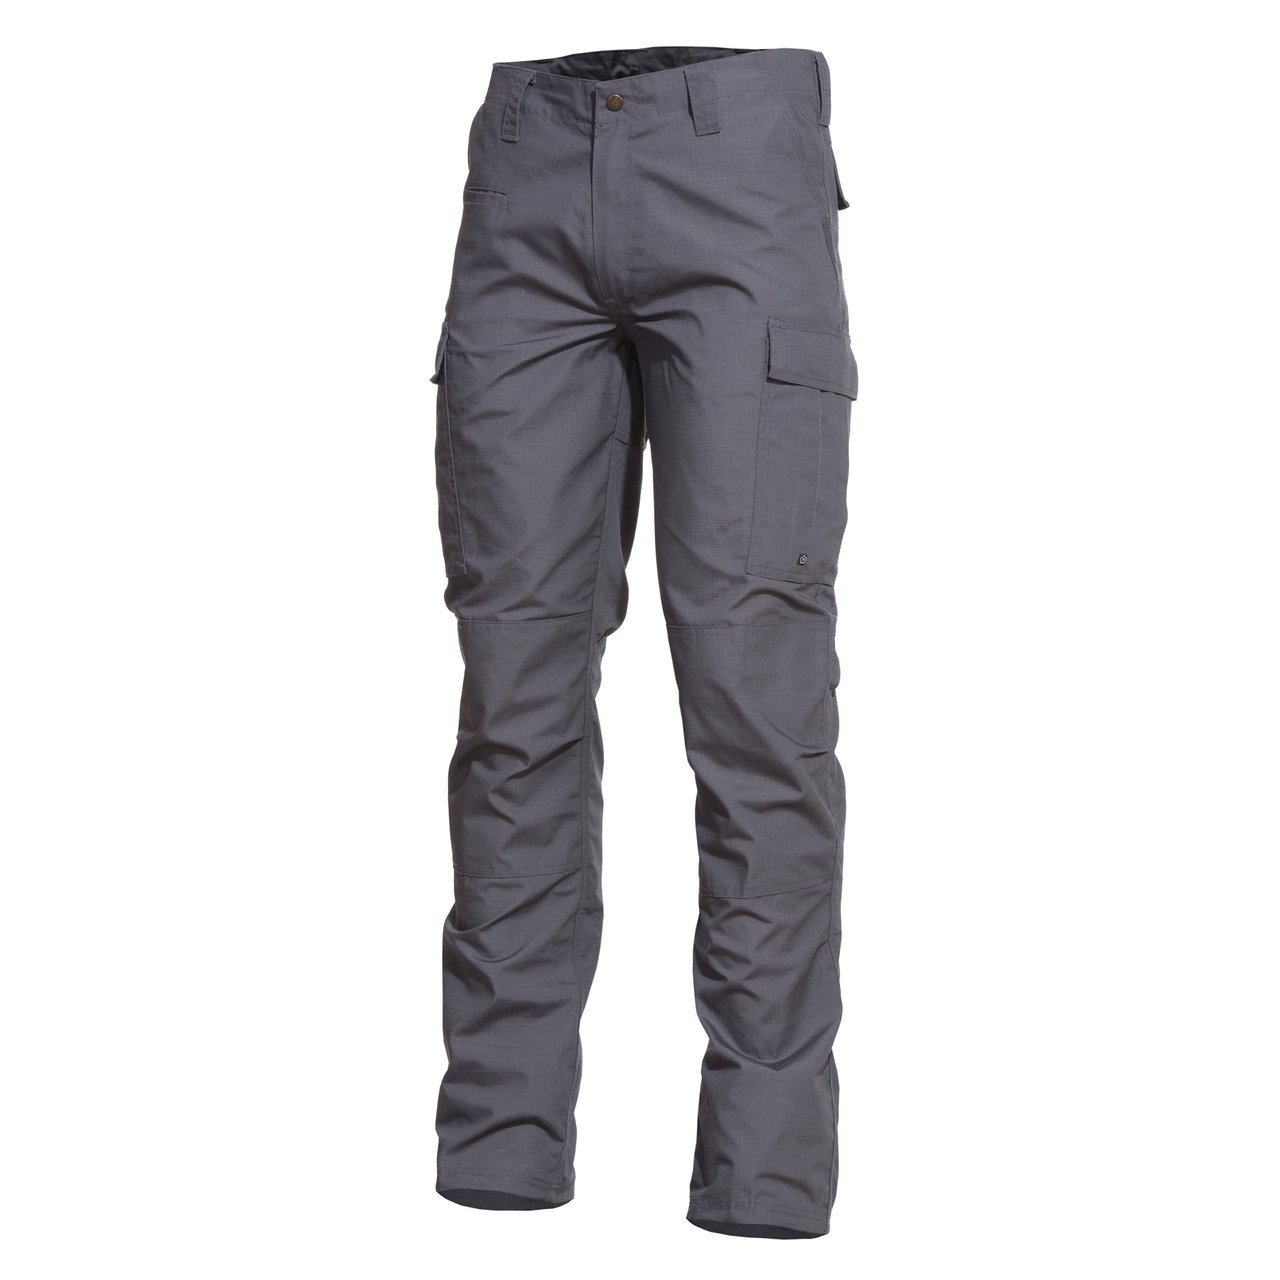 BDU 2.0 PANTS - CINDER GREY Cinder Grey | Apparel \ Pants \ BDU Pants ...